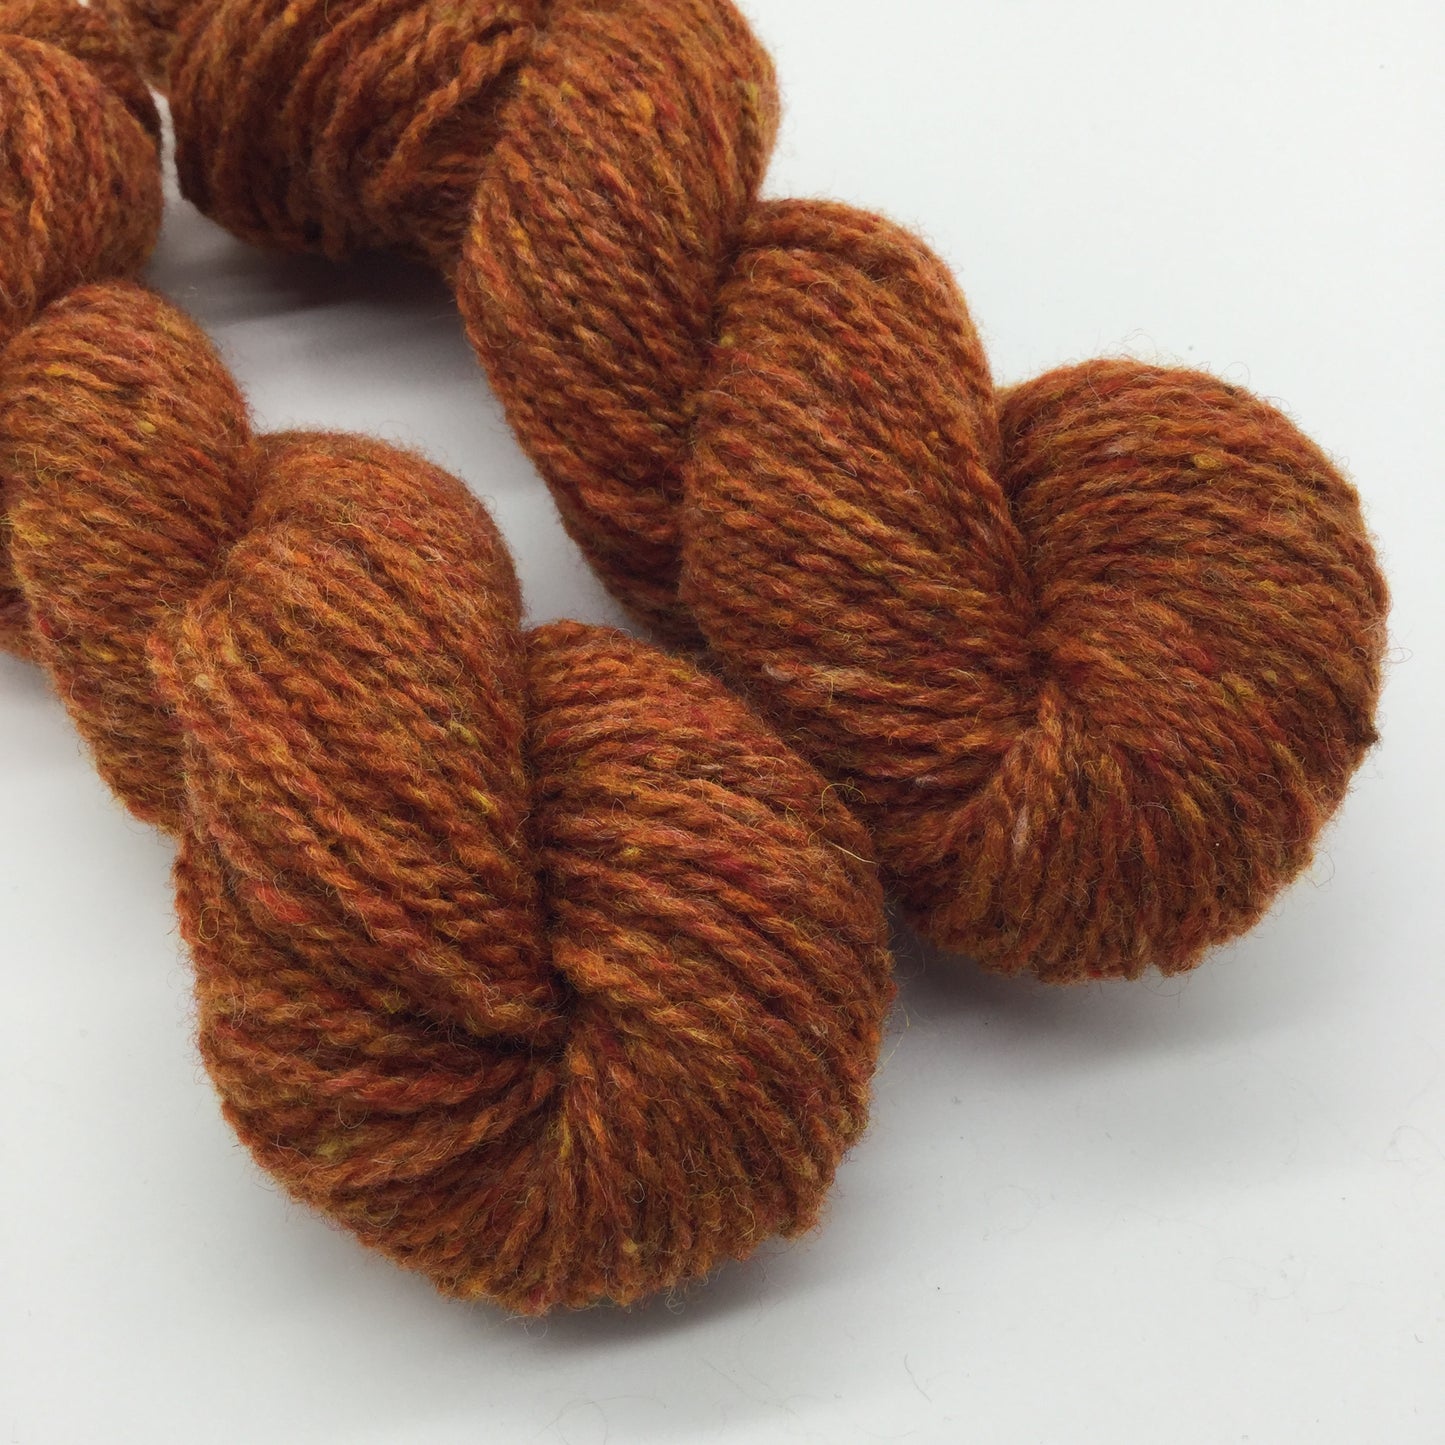 Highland Tweed "Blood Orange"